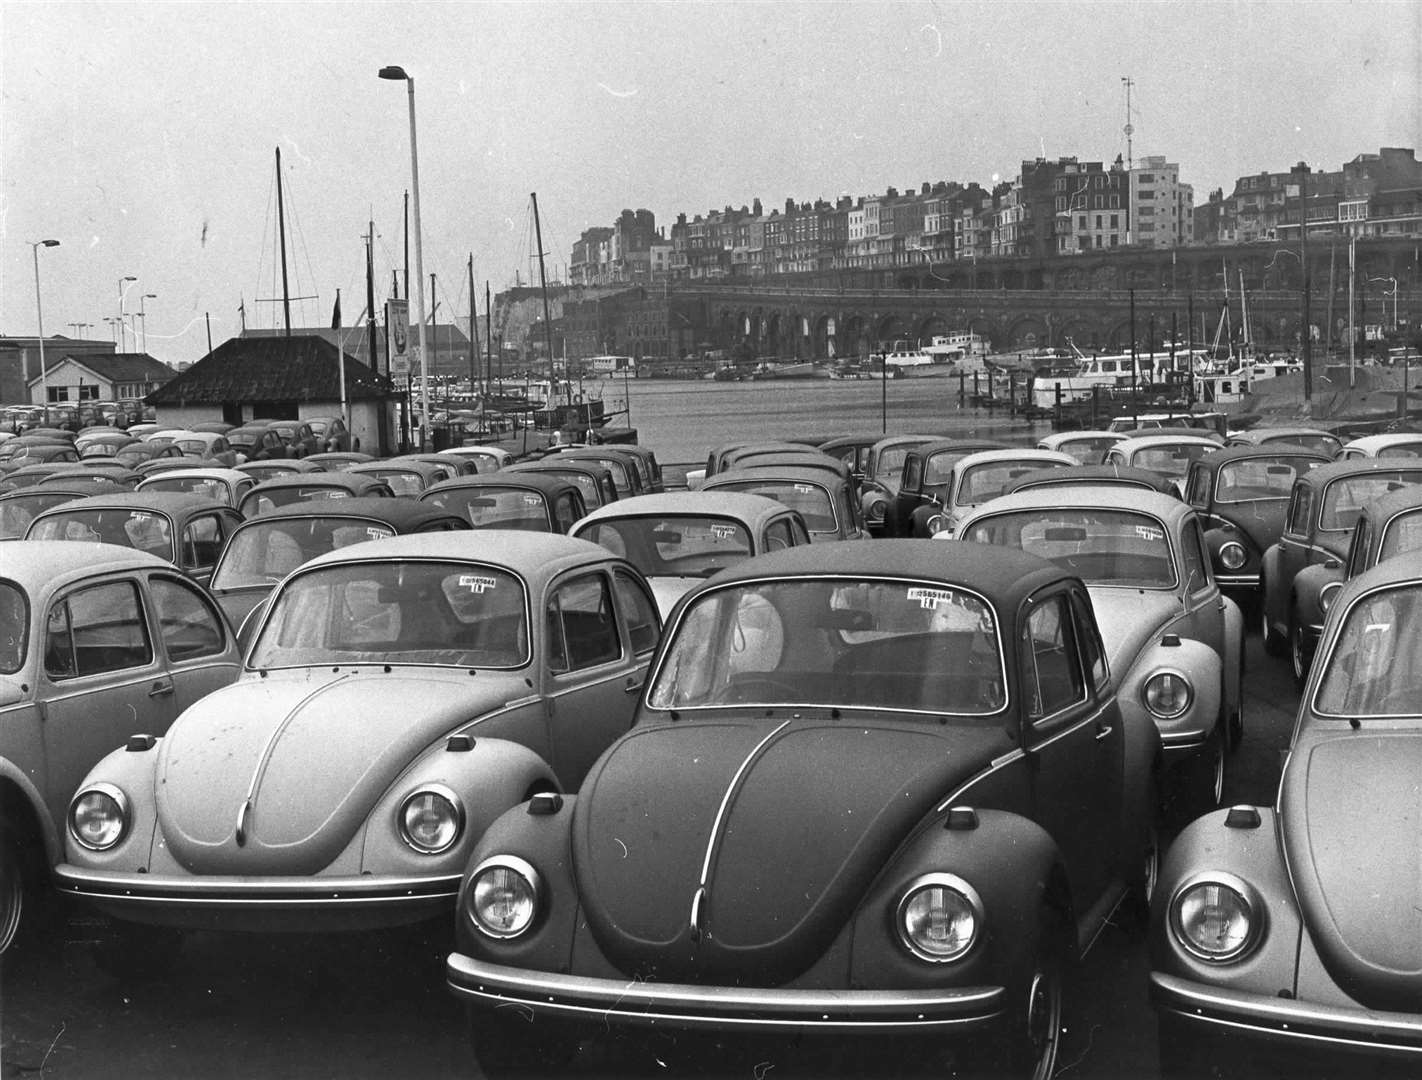 VW Beetle cars in Ramsgate harbour in February 1973